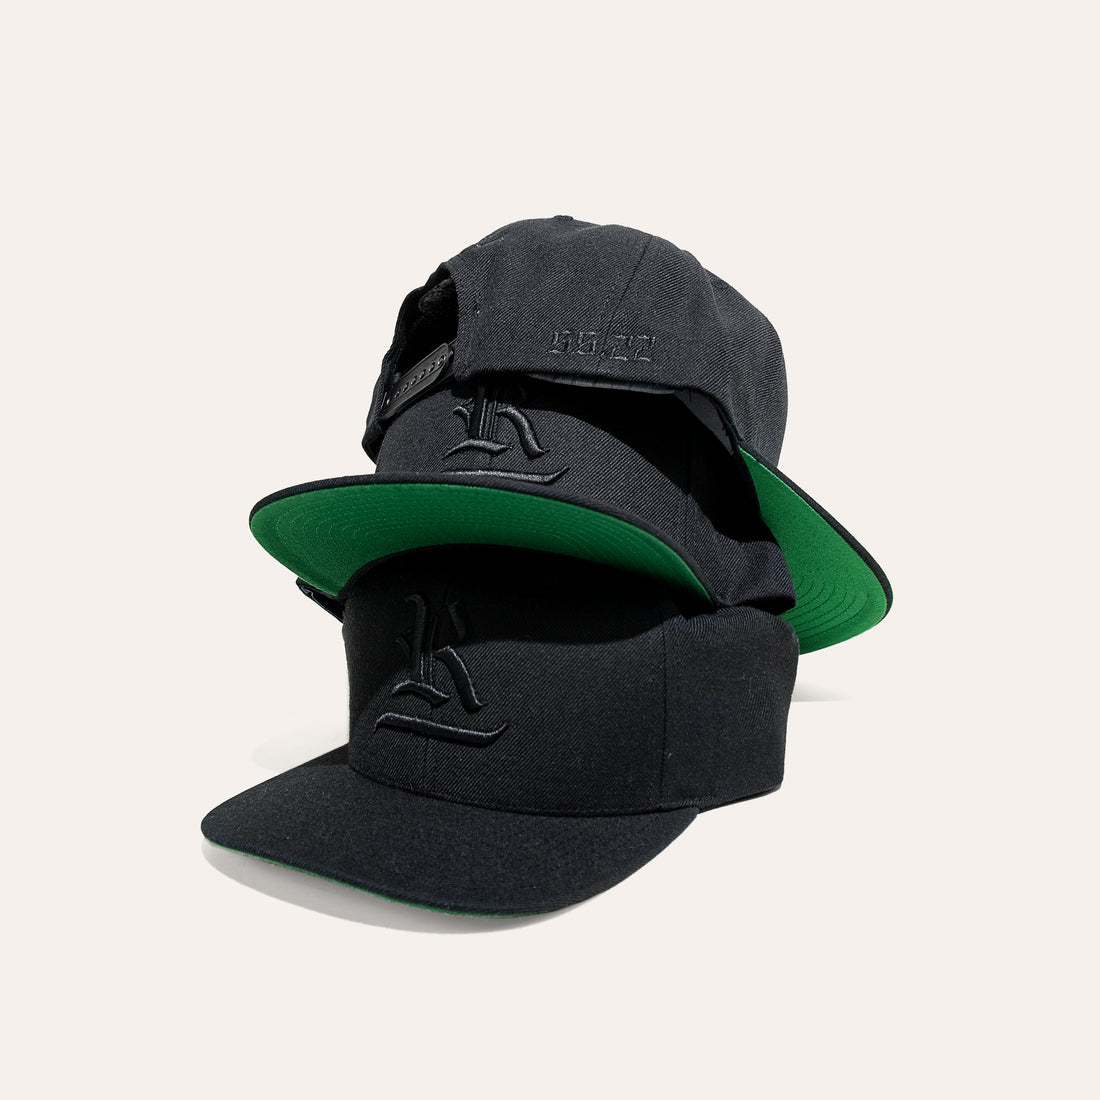 GOTHIC BLACK HAT